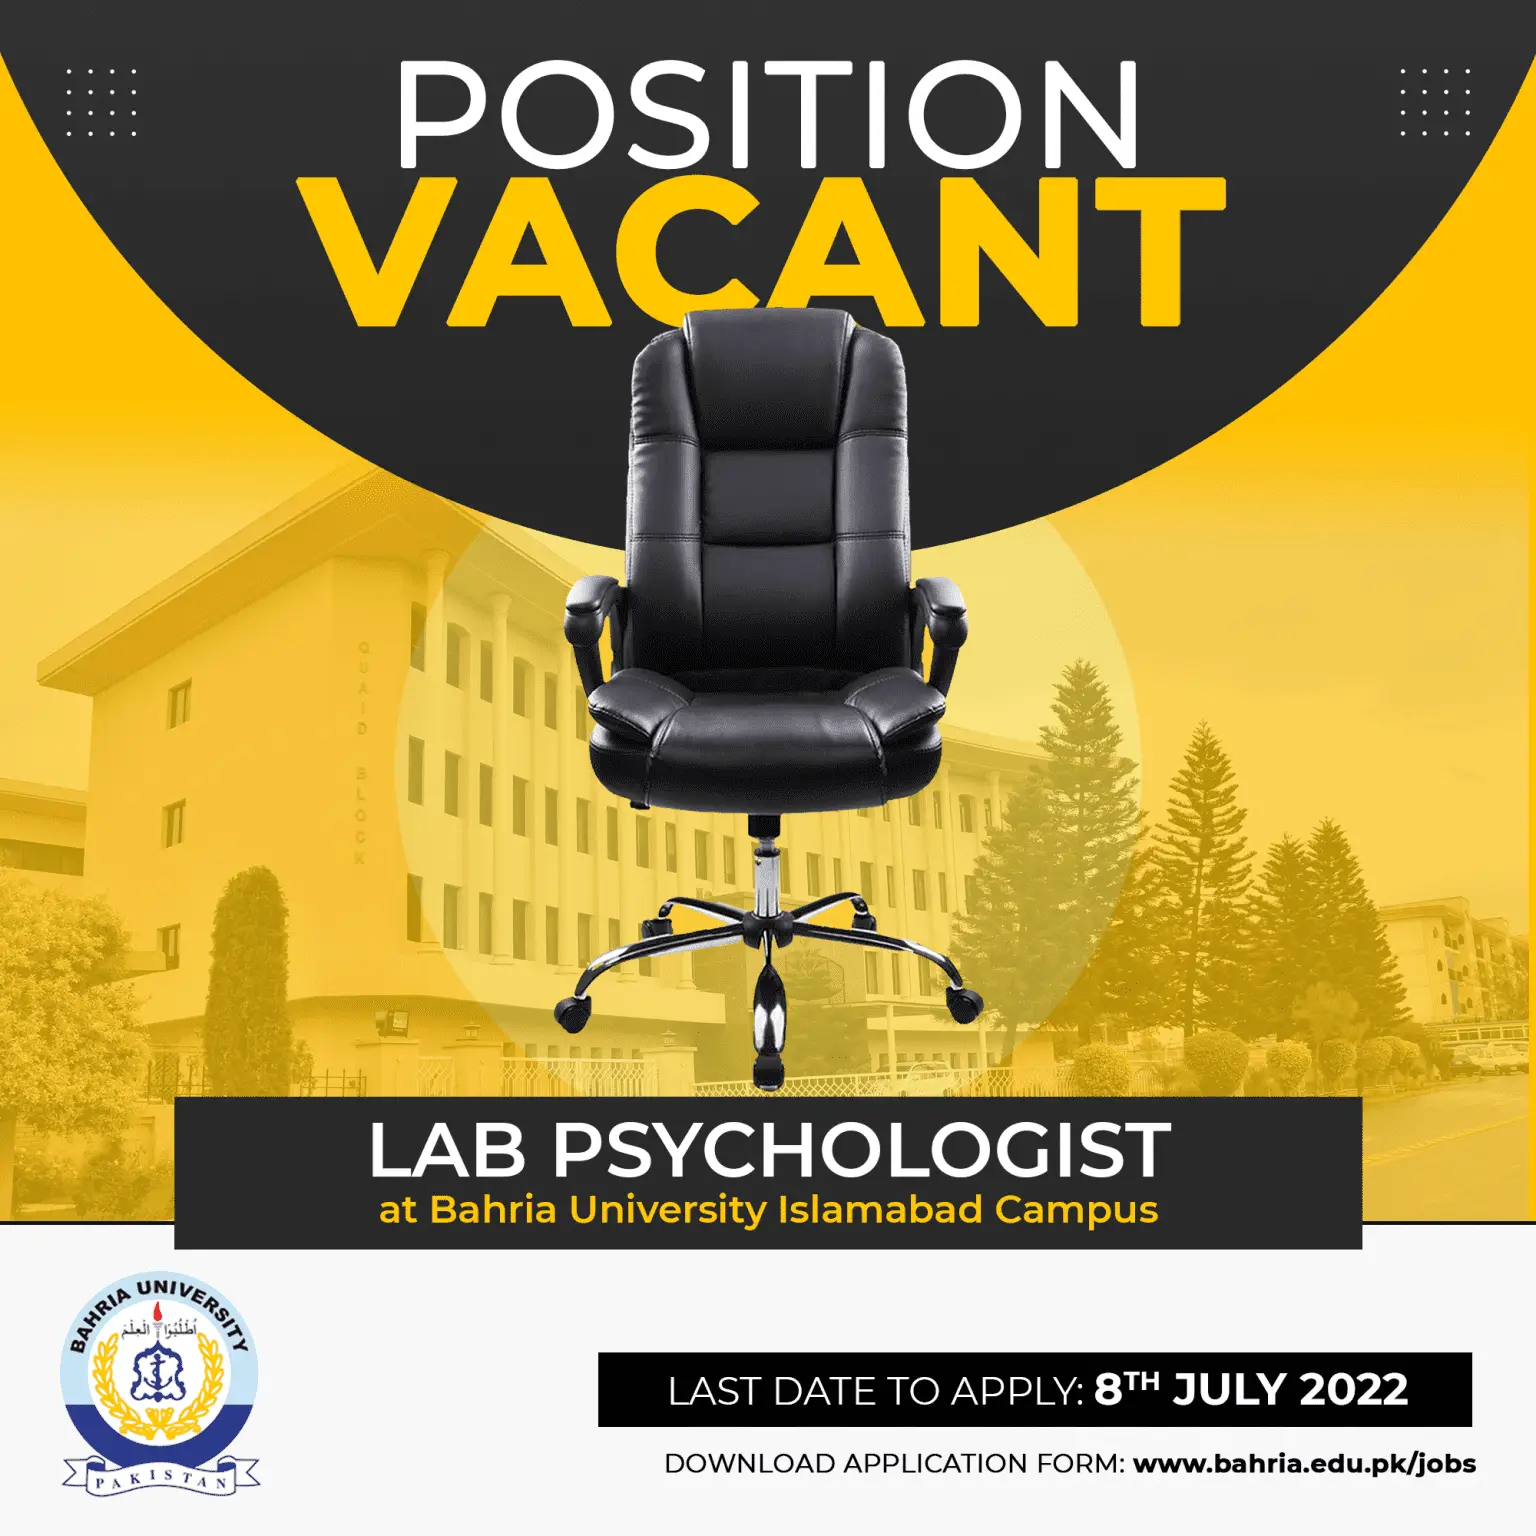 Lab Psychologist Jobs at Bahria University June 2022